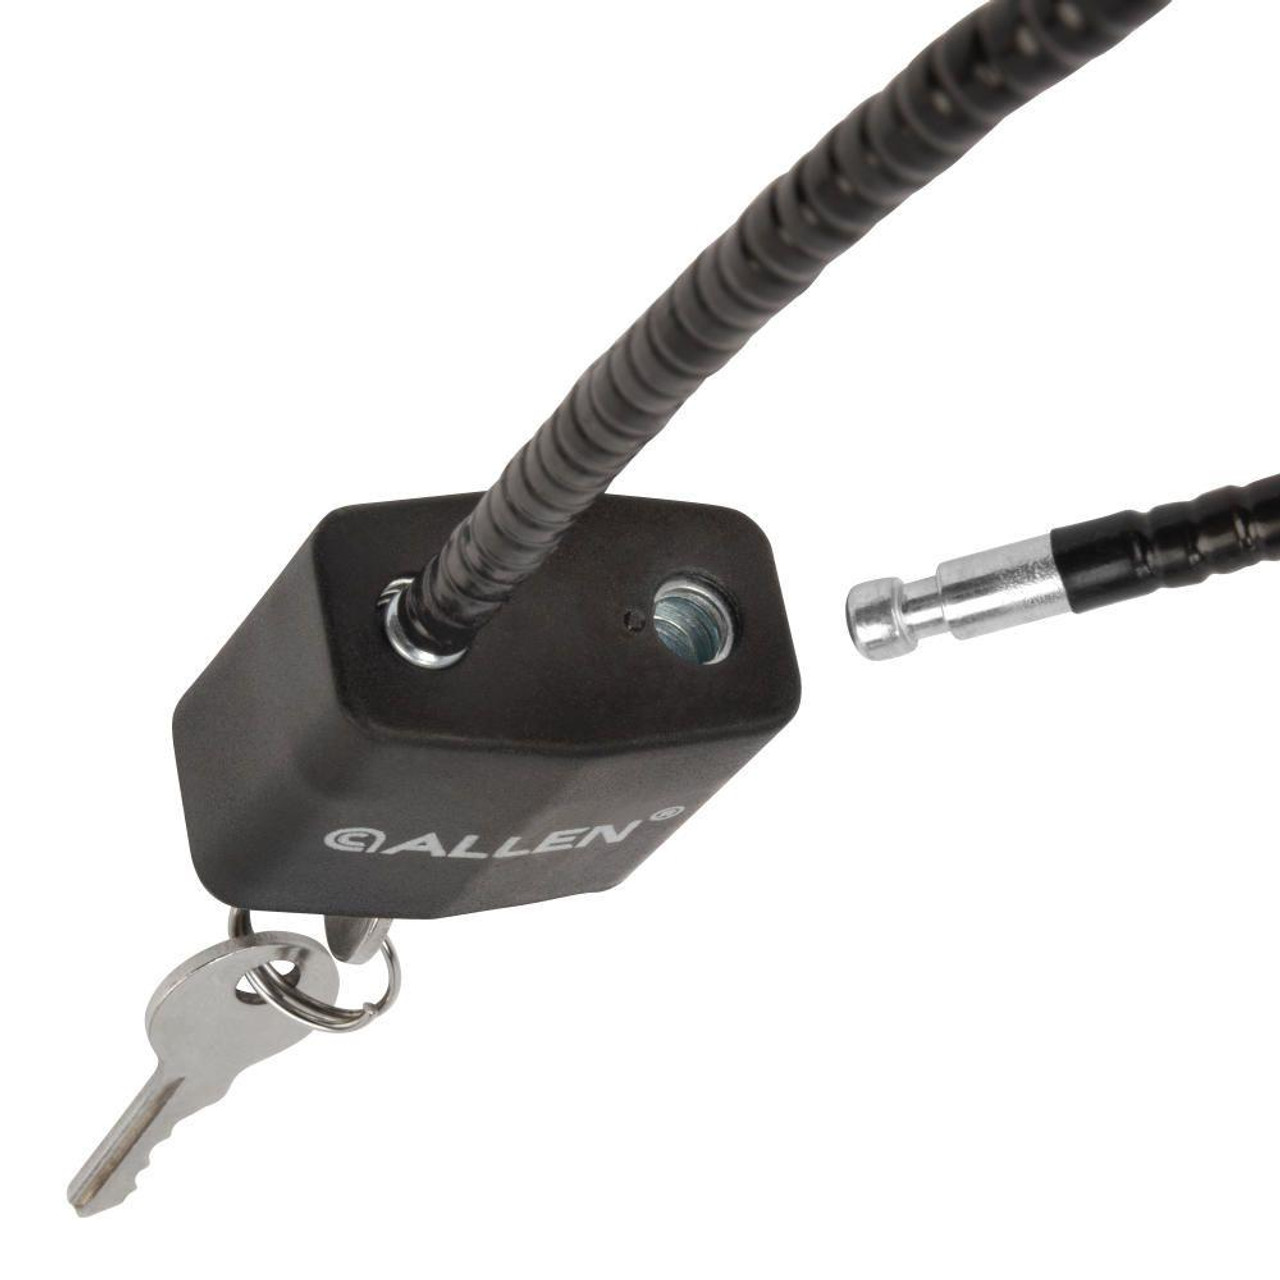 DELSWIN Cable Gun Locks with Keys - 15 Keyed Cable Gun Lock Heavy